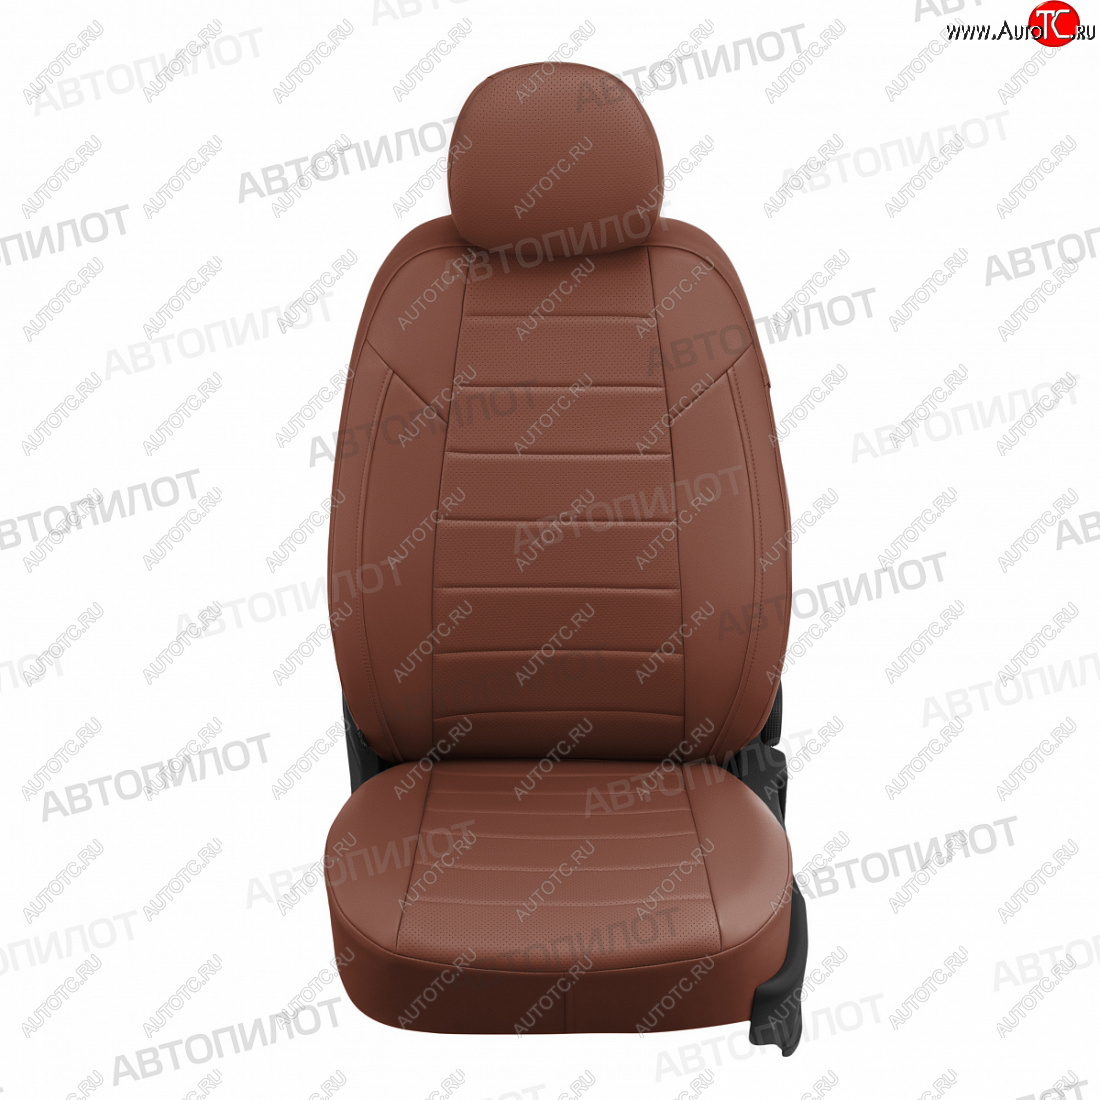 20 999 р. Чехлы сидений (экокожа, 8 мест) Автопилот  Hyundai Staria  US4 (2021-2022) (коричневый)